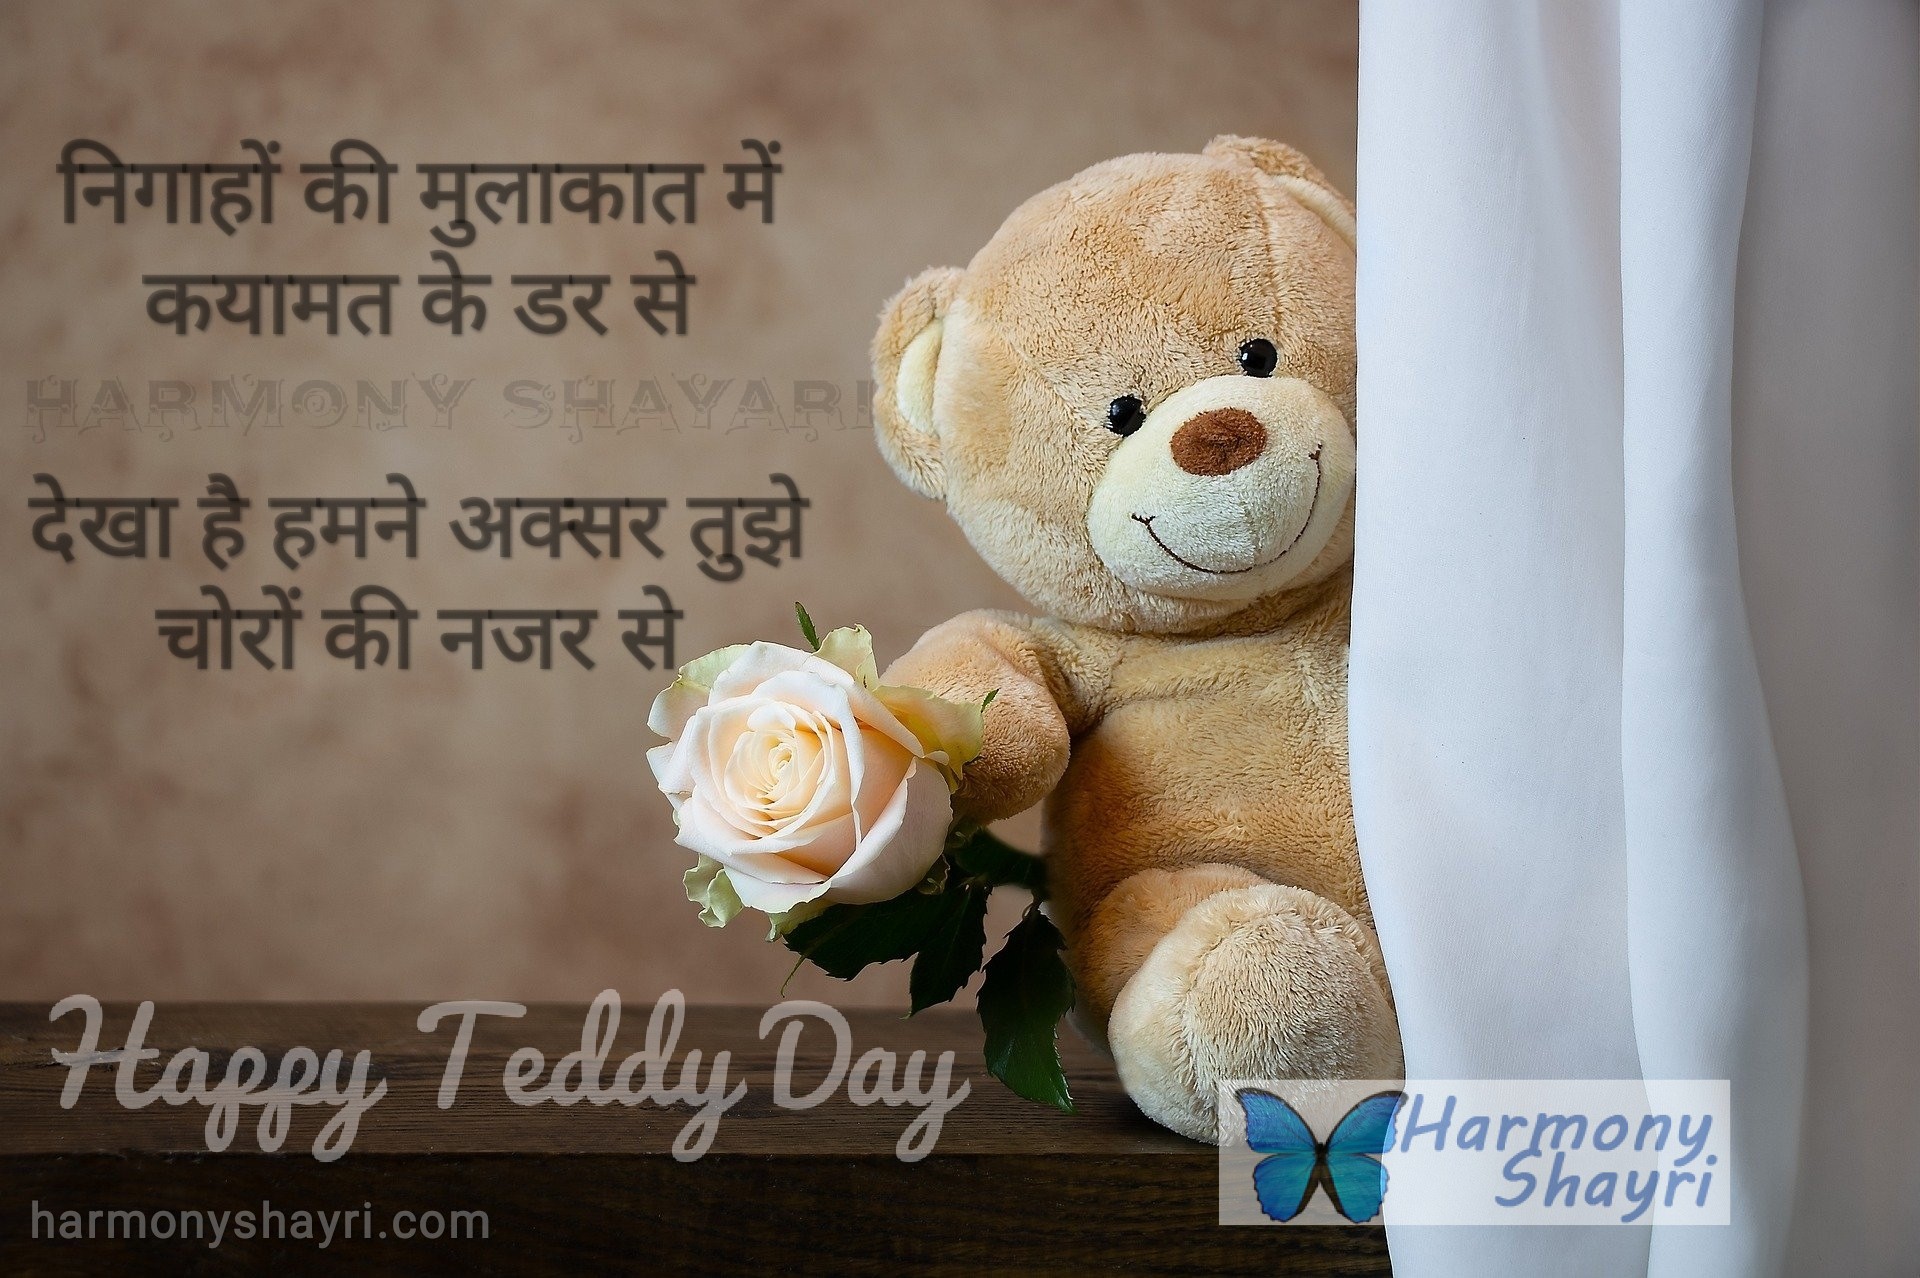 Nigaahon ki mulakat mein qayamat – Happy Teddy Day